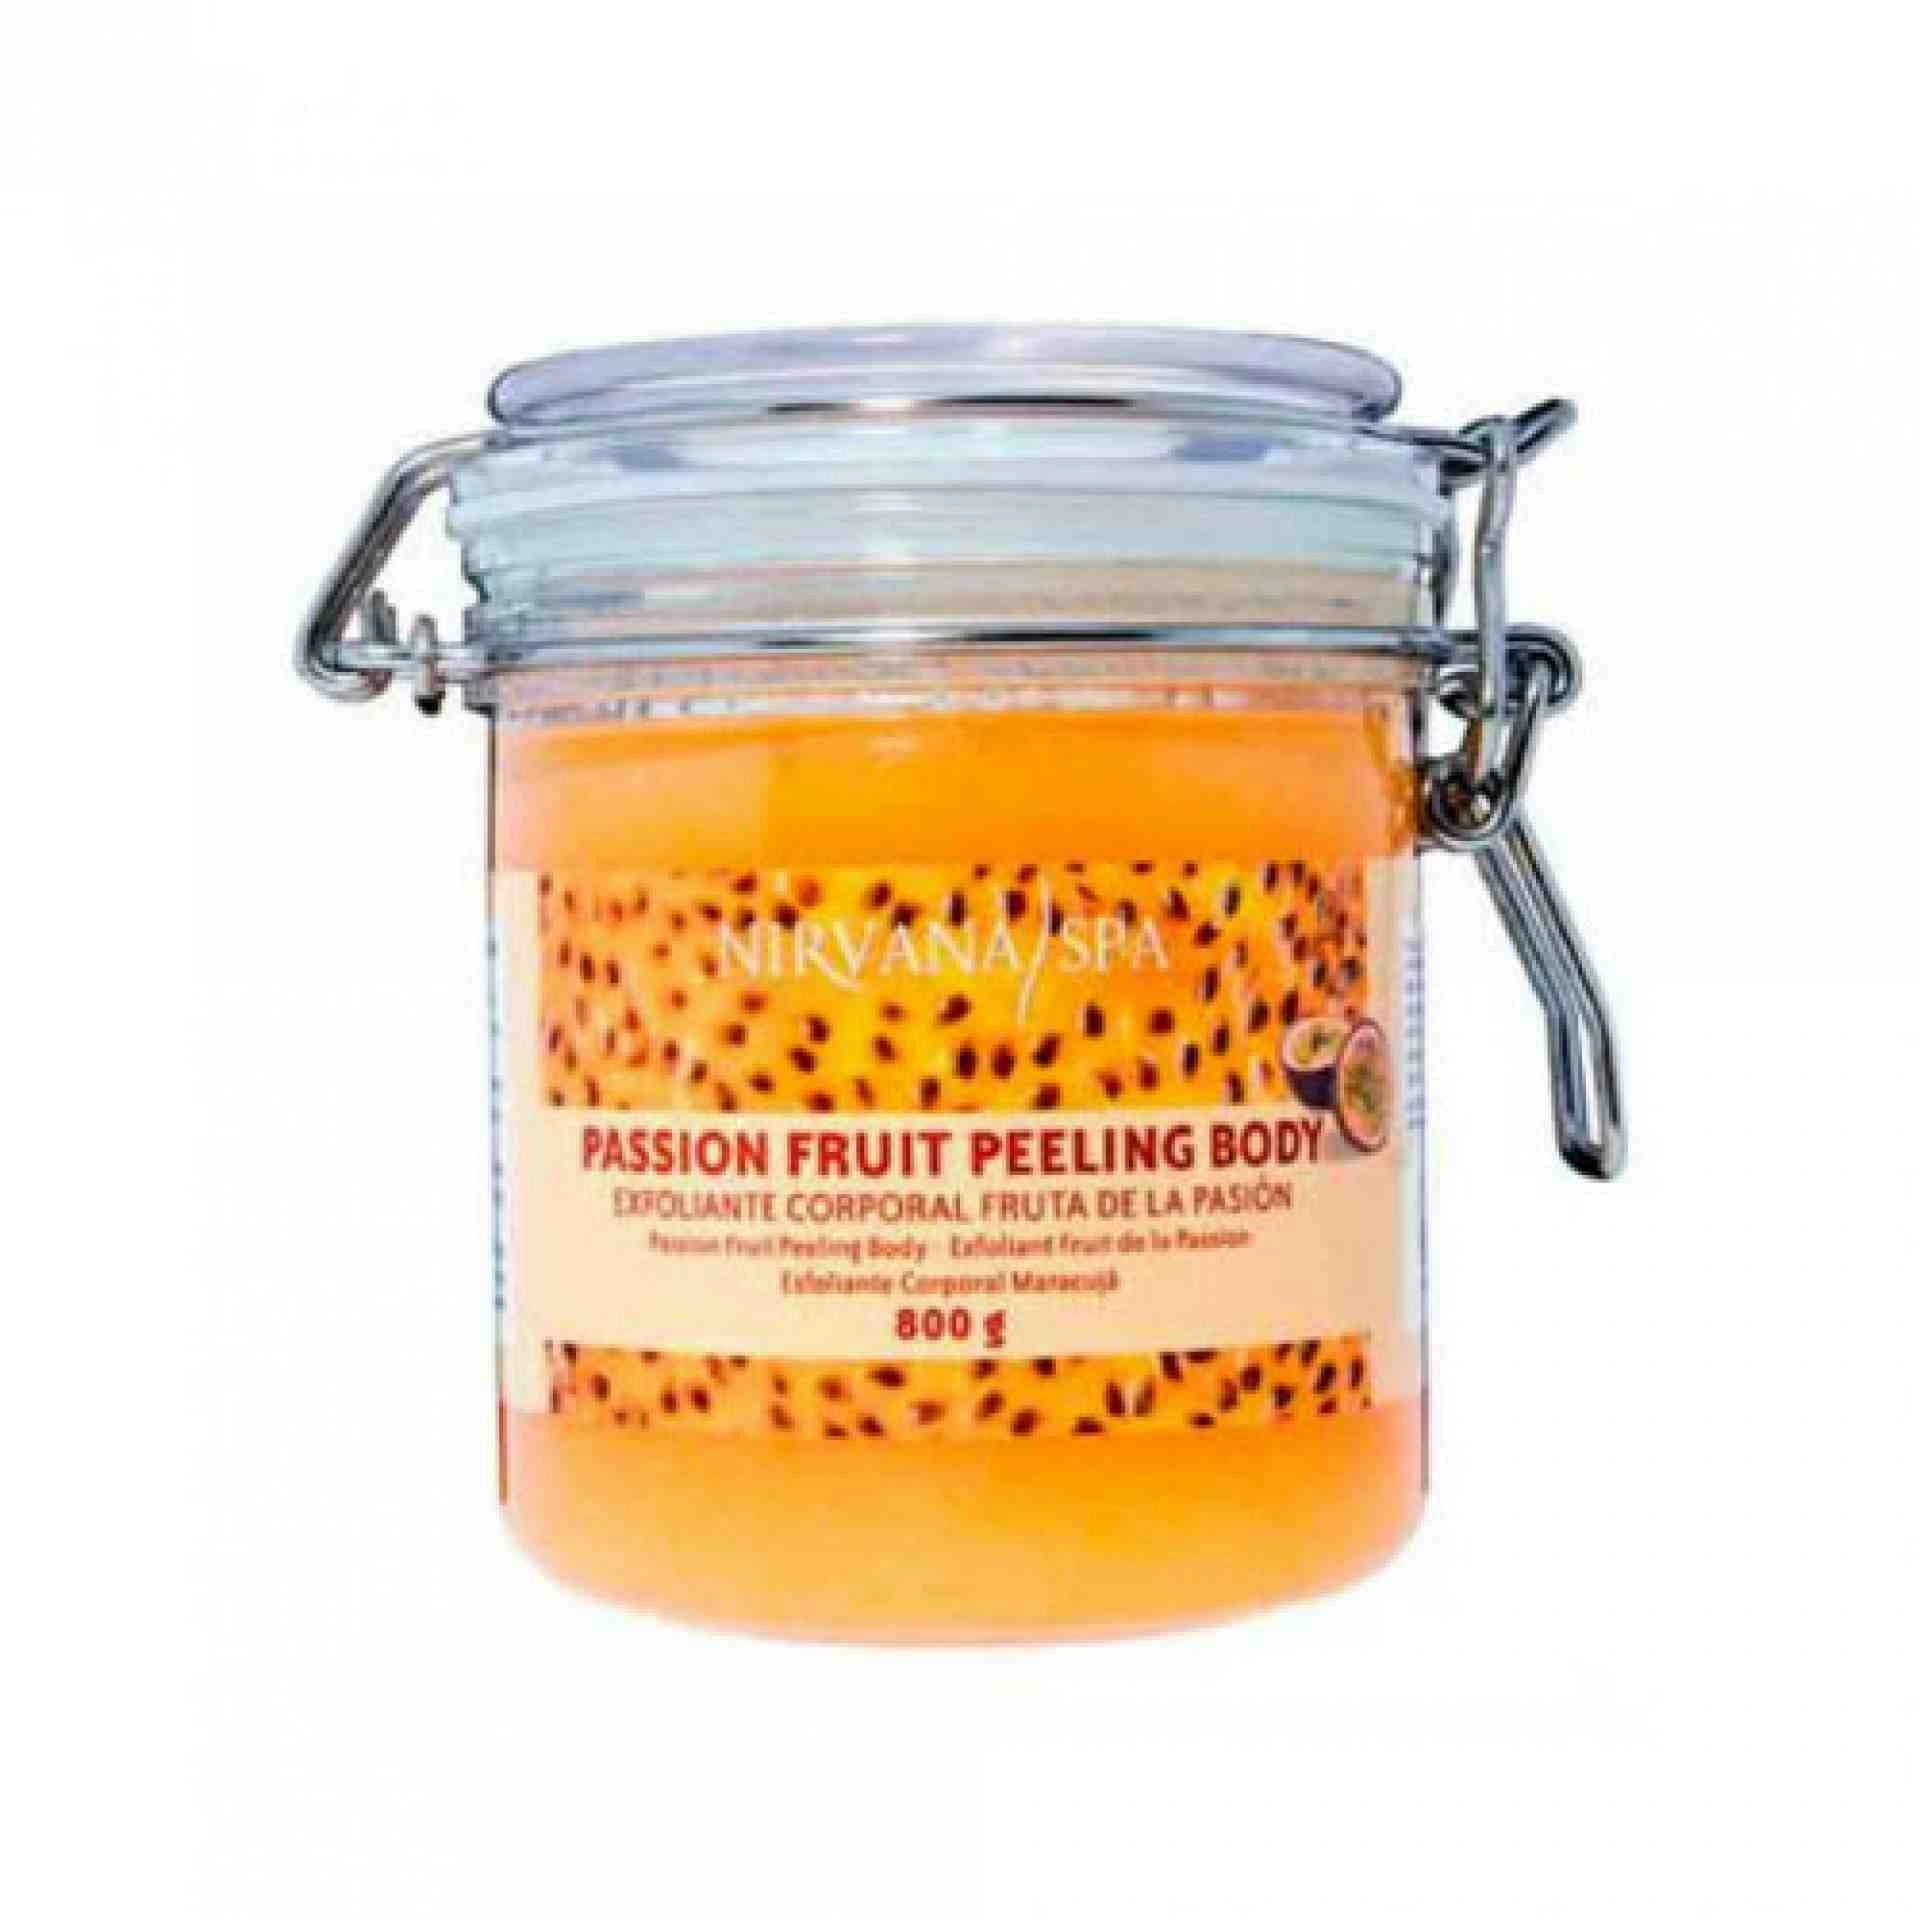 Passion Fruit Peeling Body | Exfoliante corporal fruta de la pasión 800g - Nirvana Spa ®